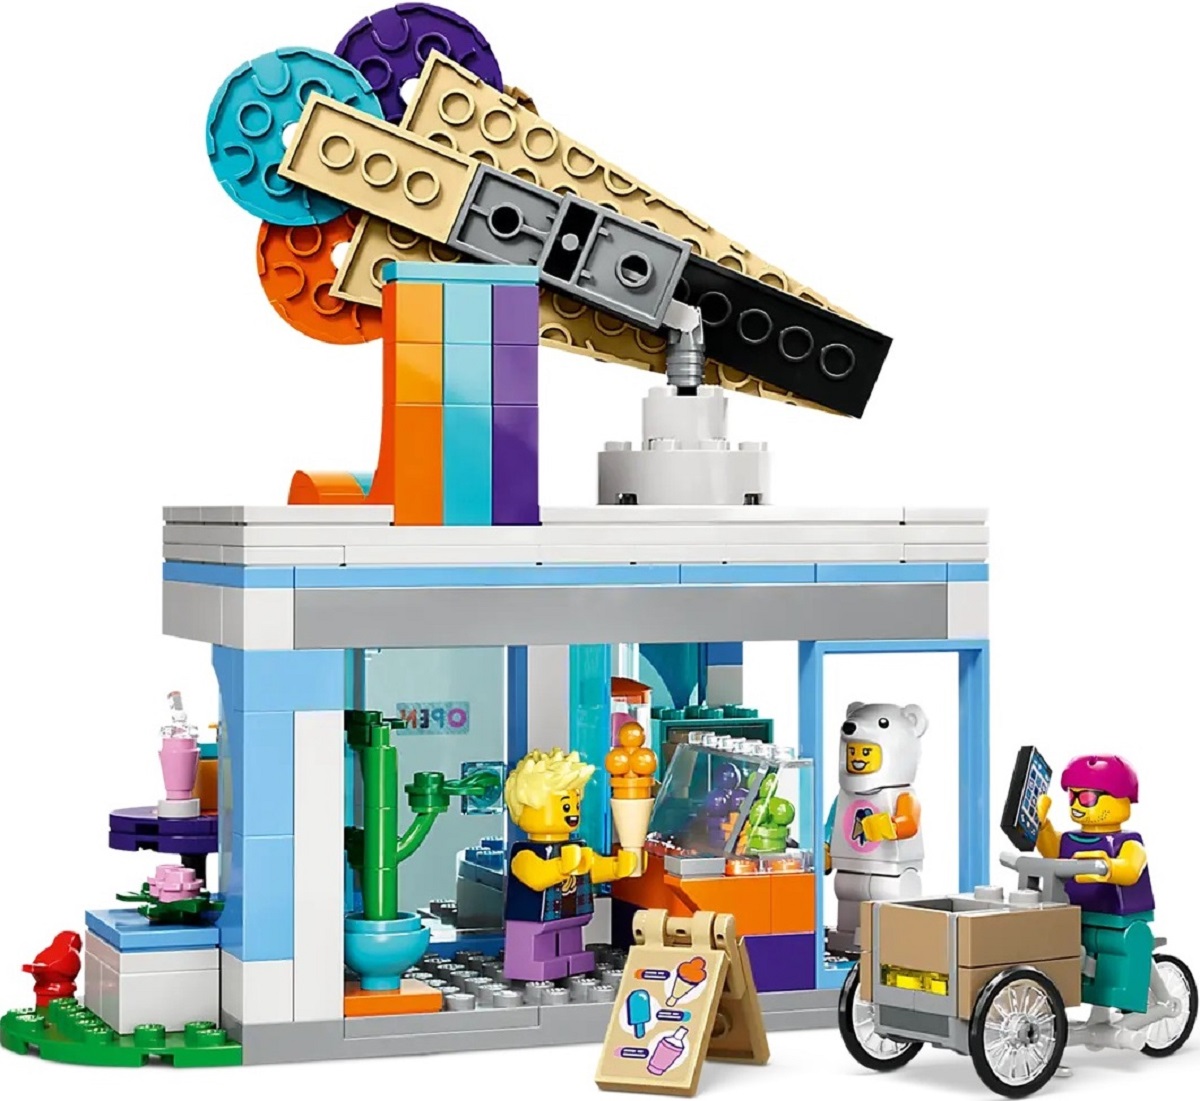 Lego City. Magazin de inghetata